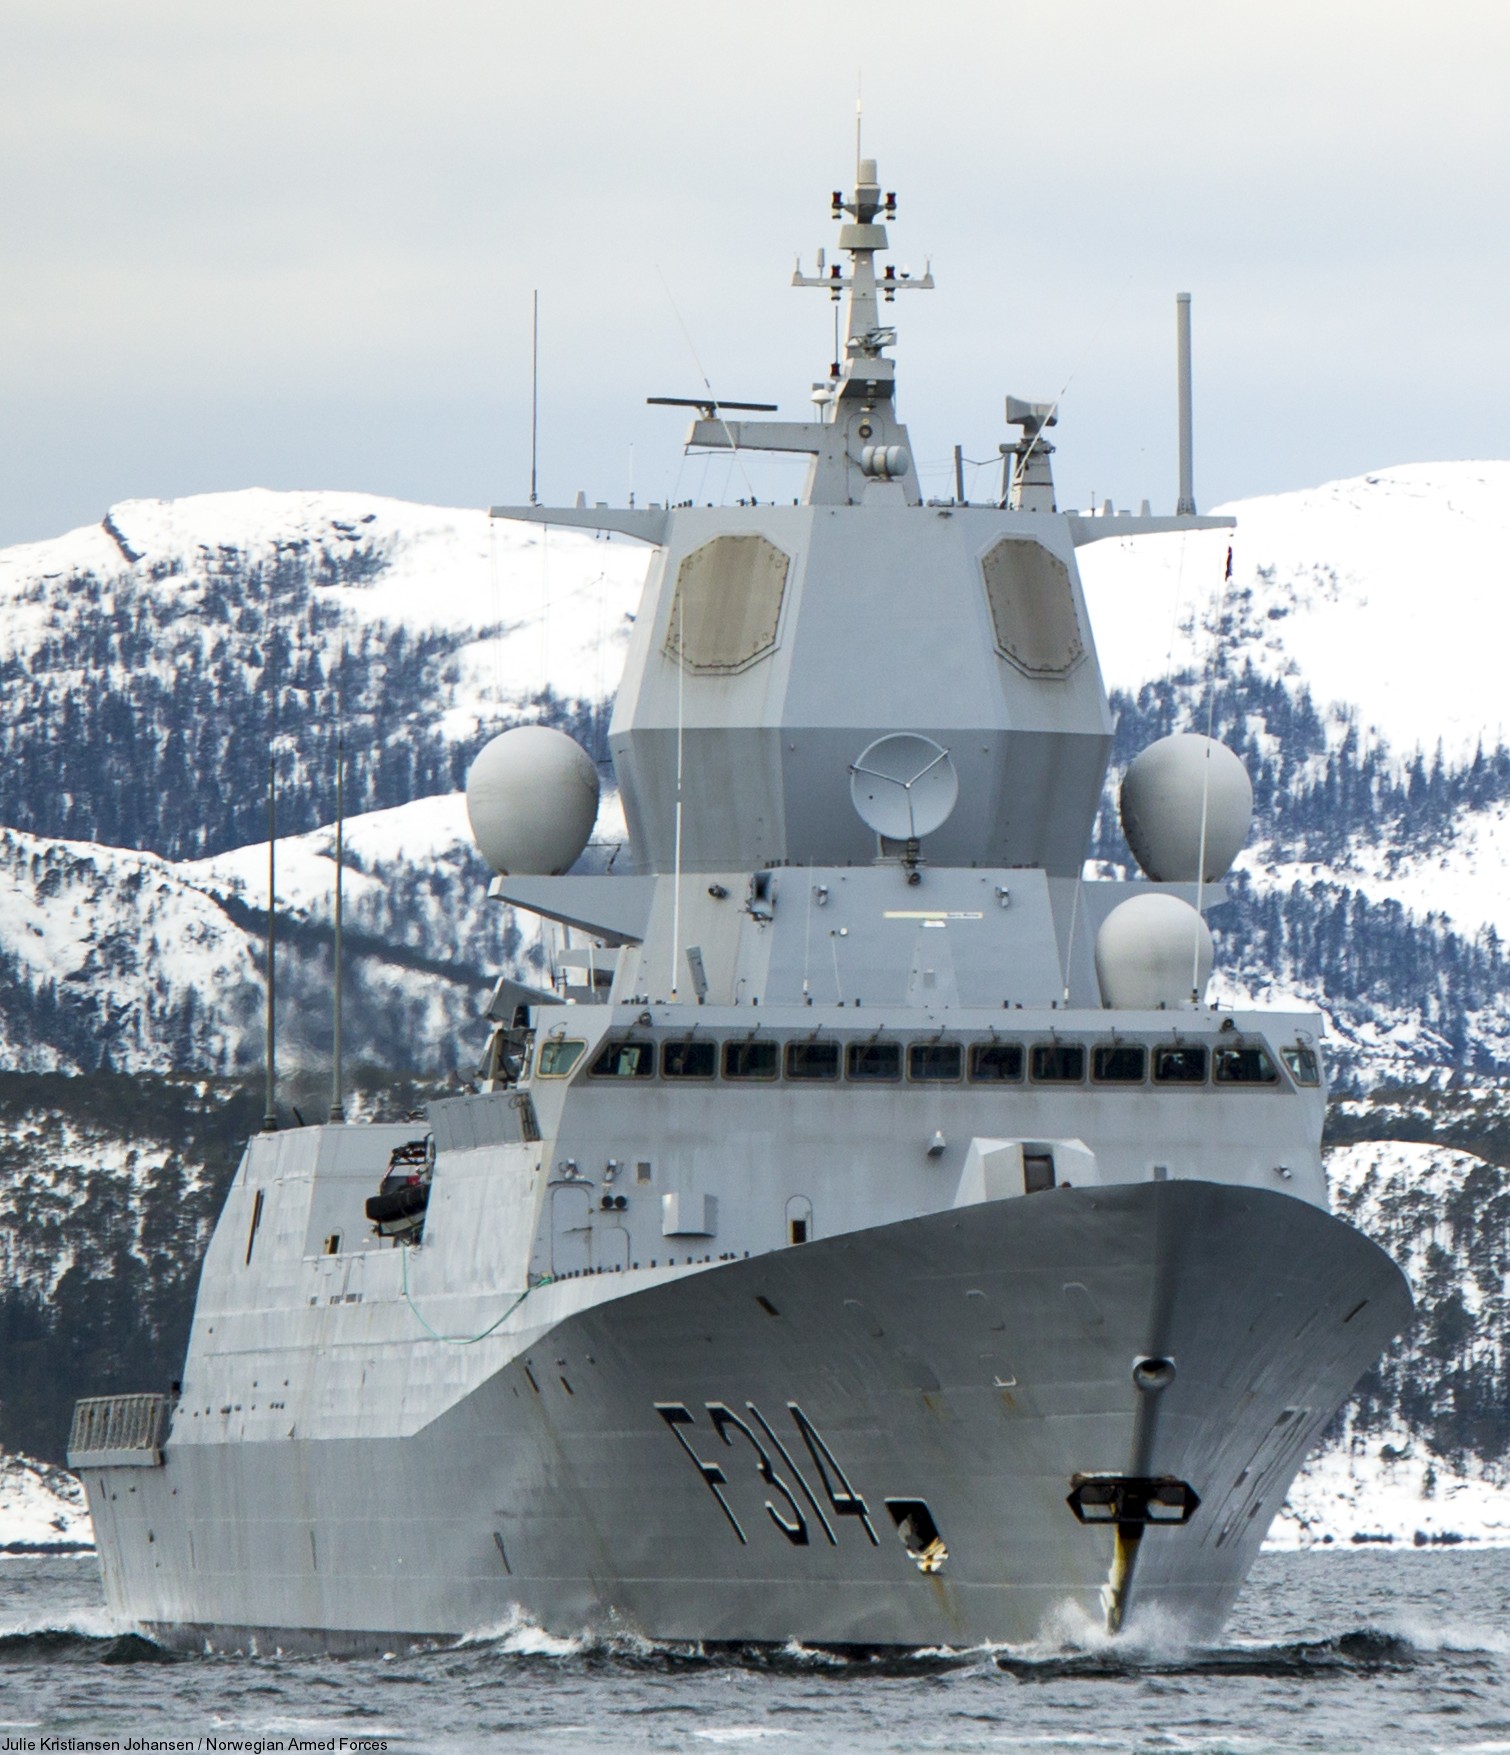 f-314 thor heyerdahl hnoms knm fridtjof nansen class frigate royal norwegian navy 24 an/spy-1f radar aegis